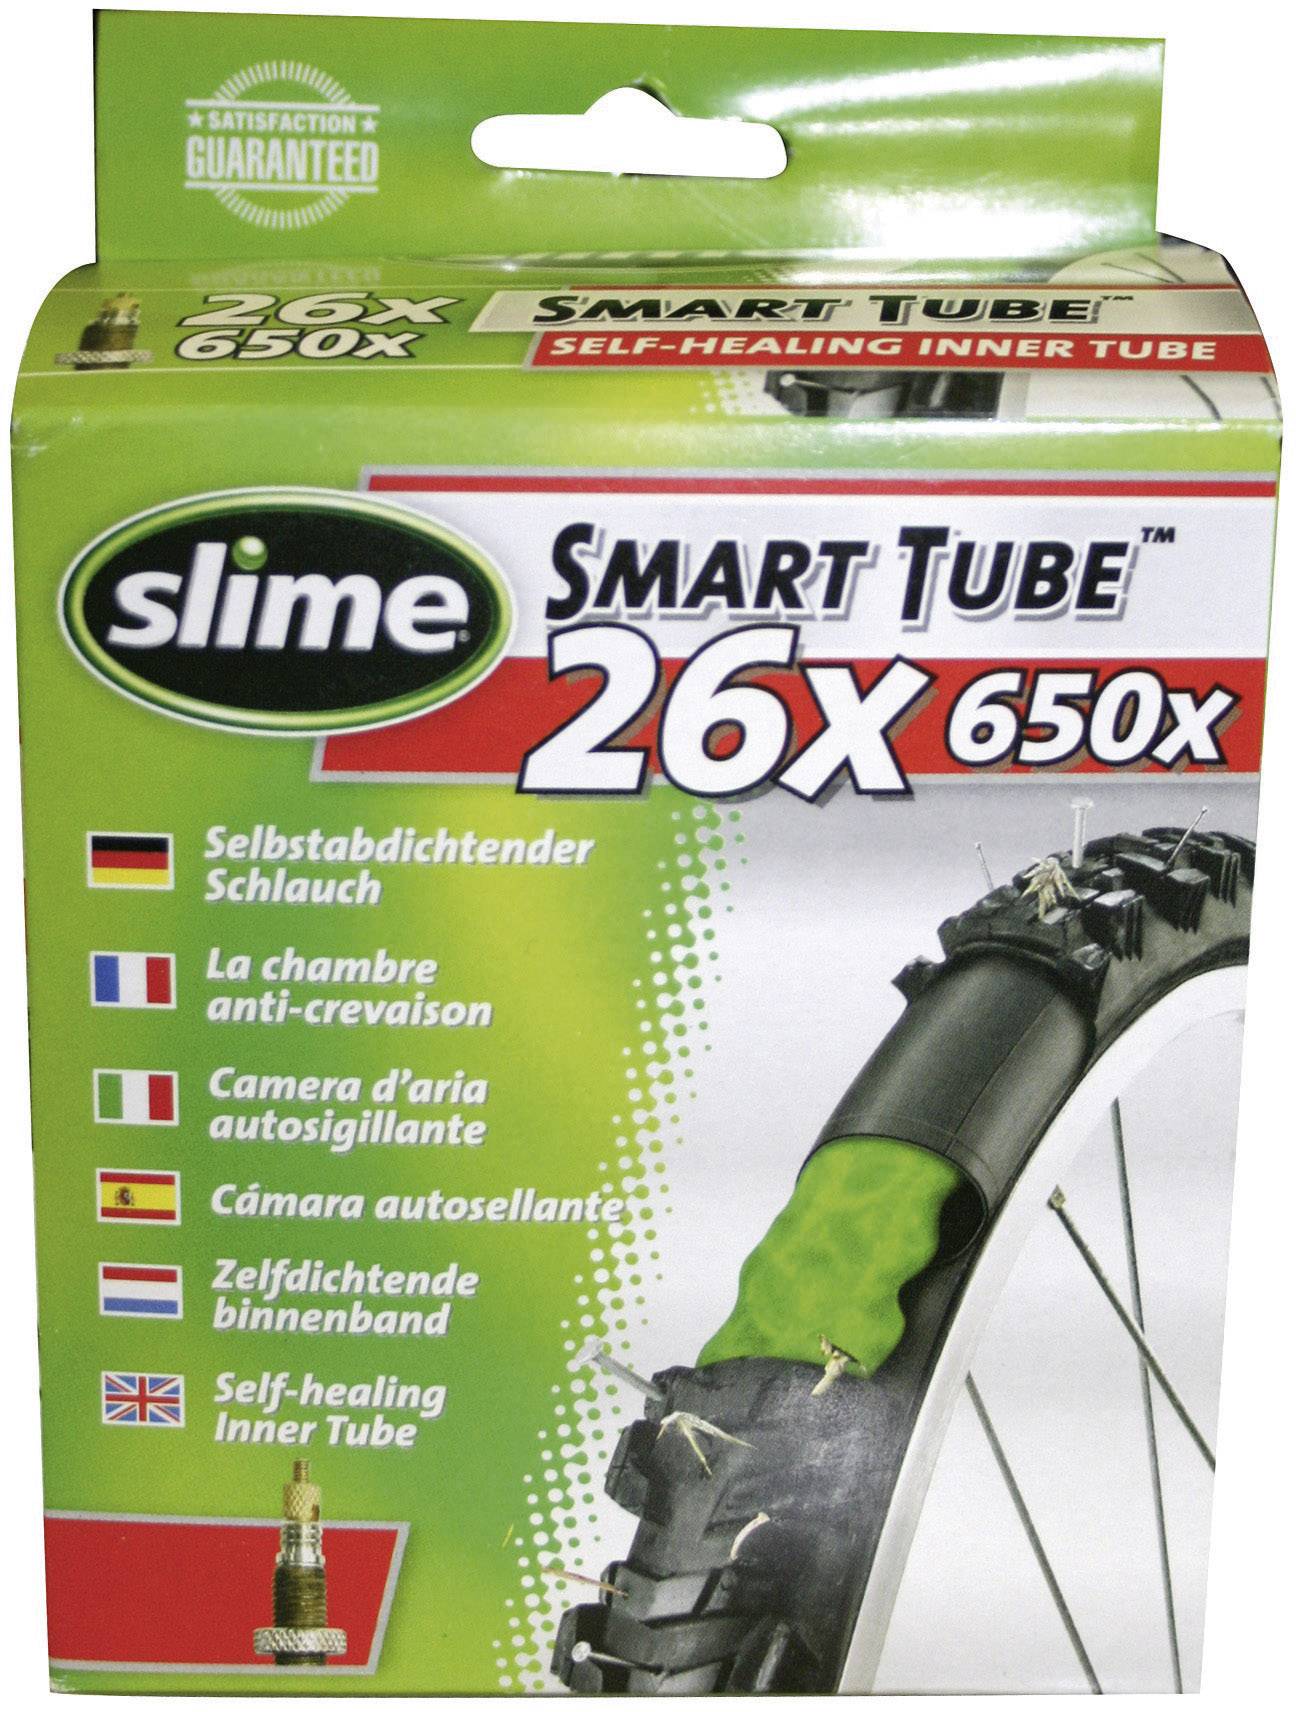 slime bike tubes review